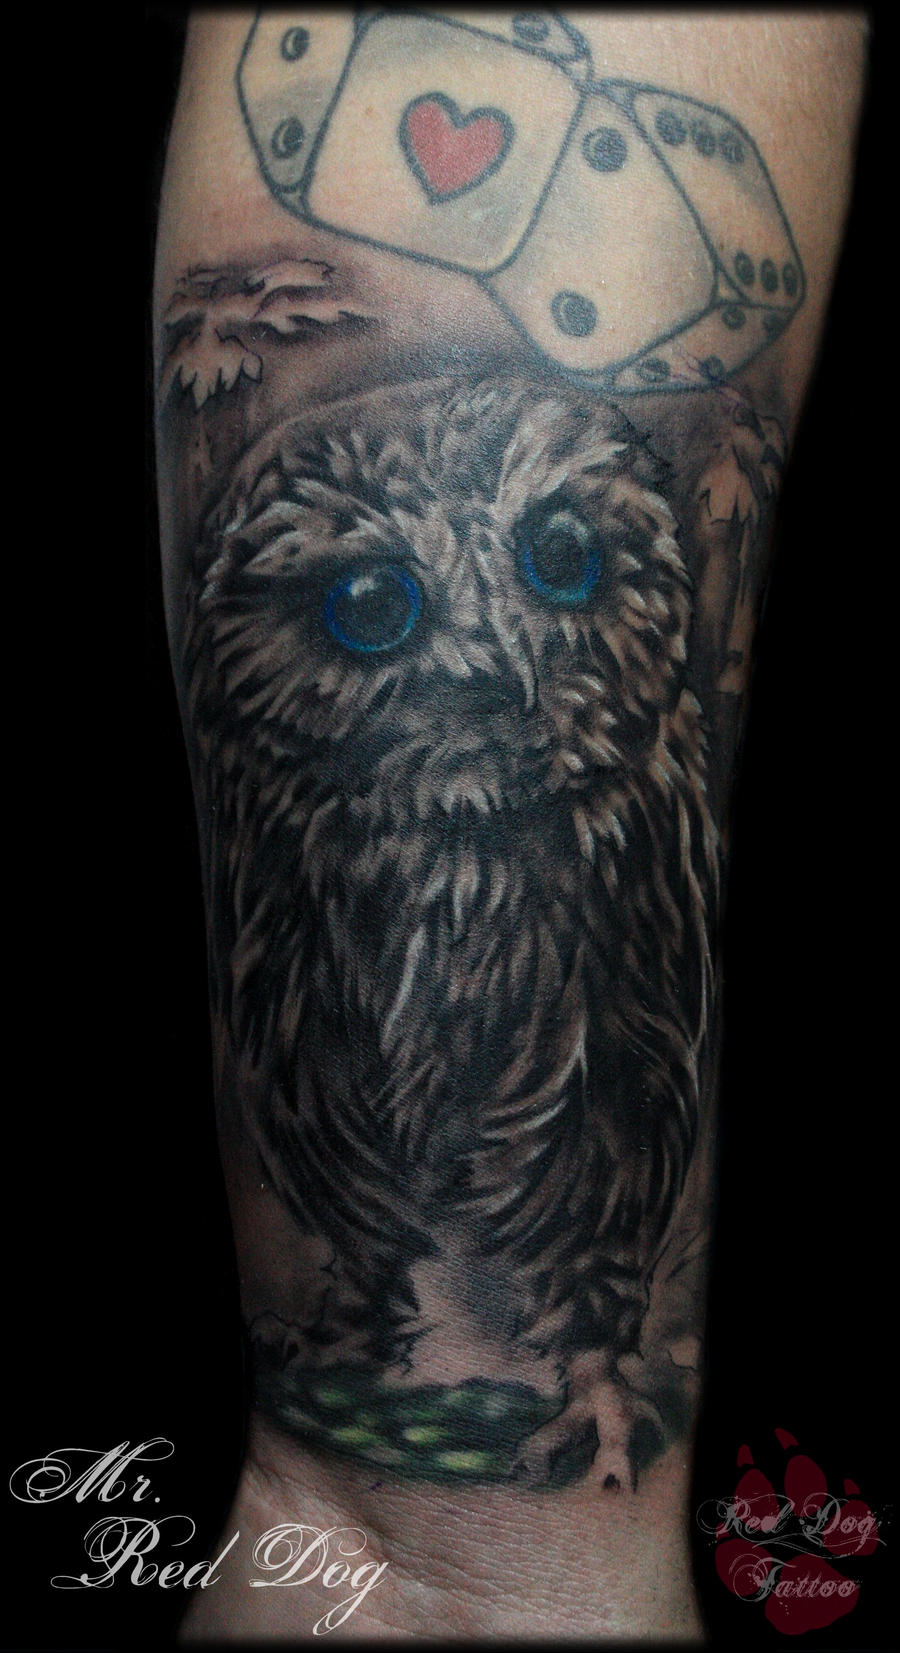 Baby Owl Tattoo by Reddogtattoo on DeviantArt